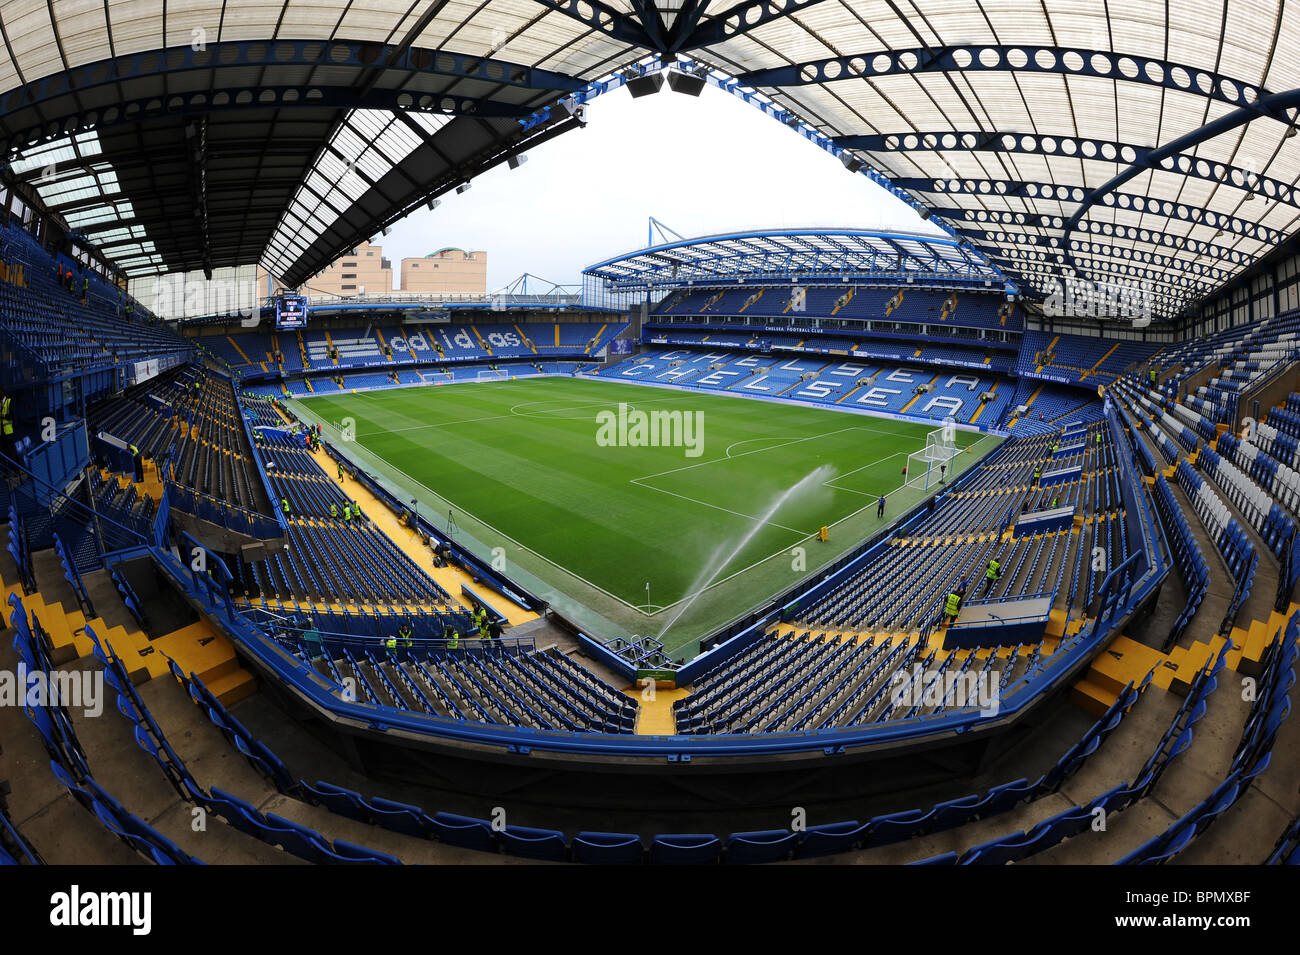 File:Chelsea Football Club, Stamford Bridge 07.jpg - Wikimedia Commons